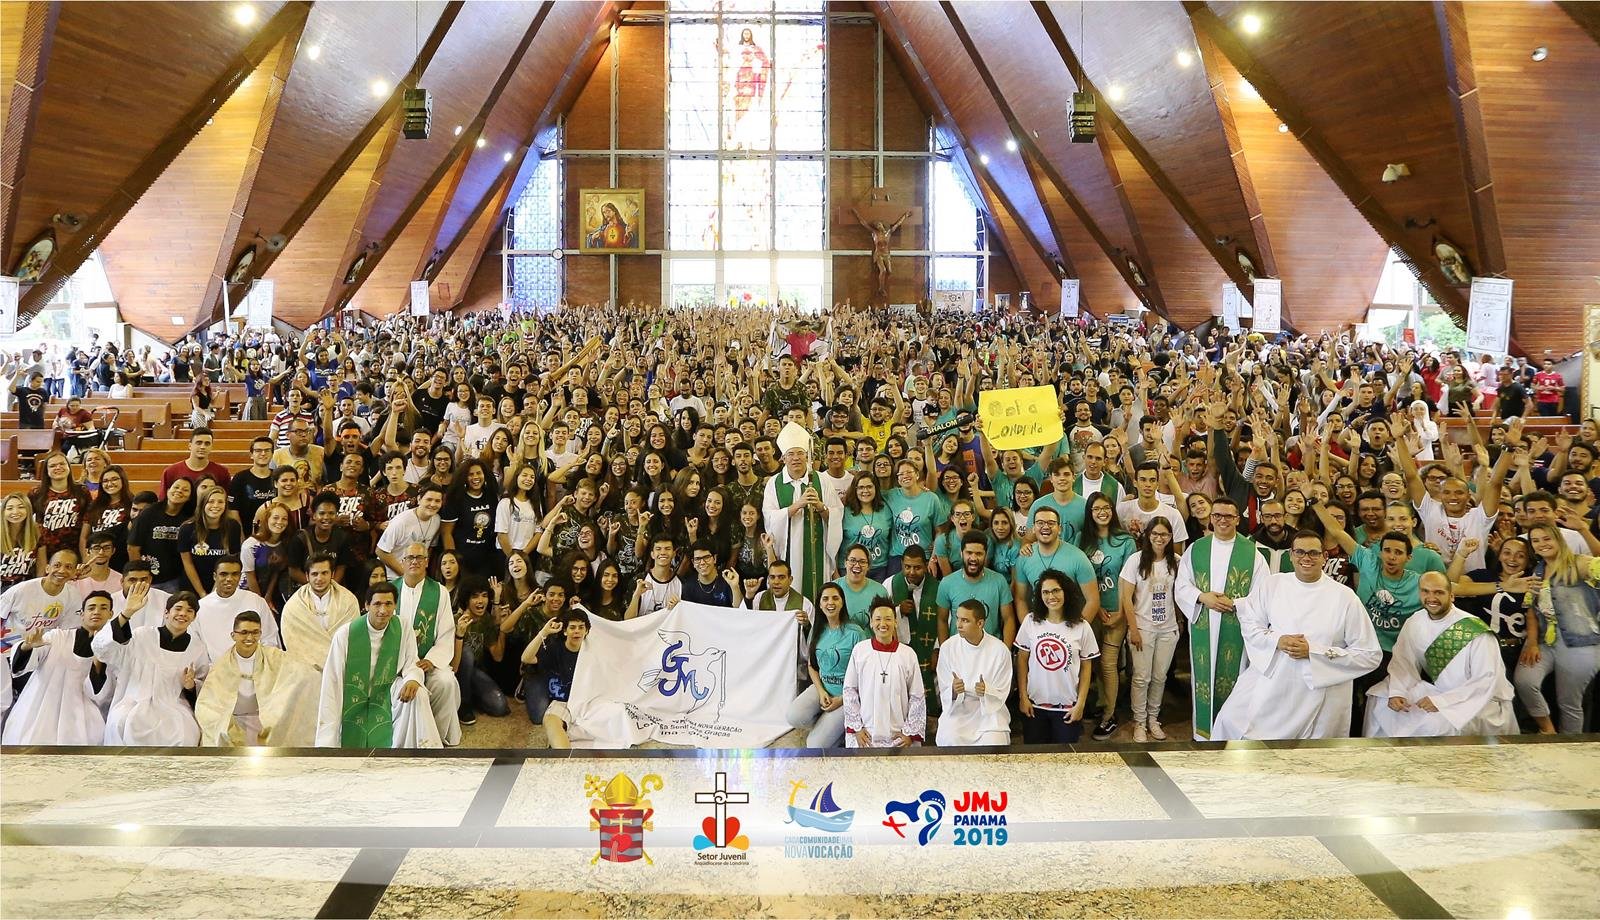 2ª Jornada Missionária da Juventude lota a Catedral de Londrina